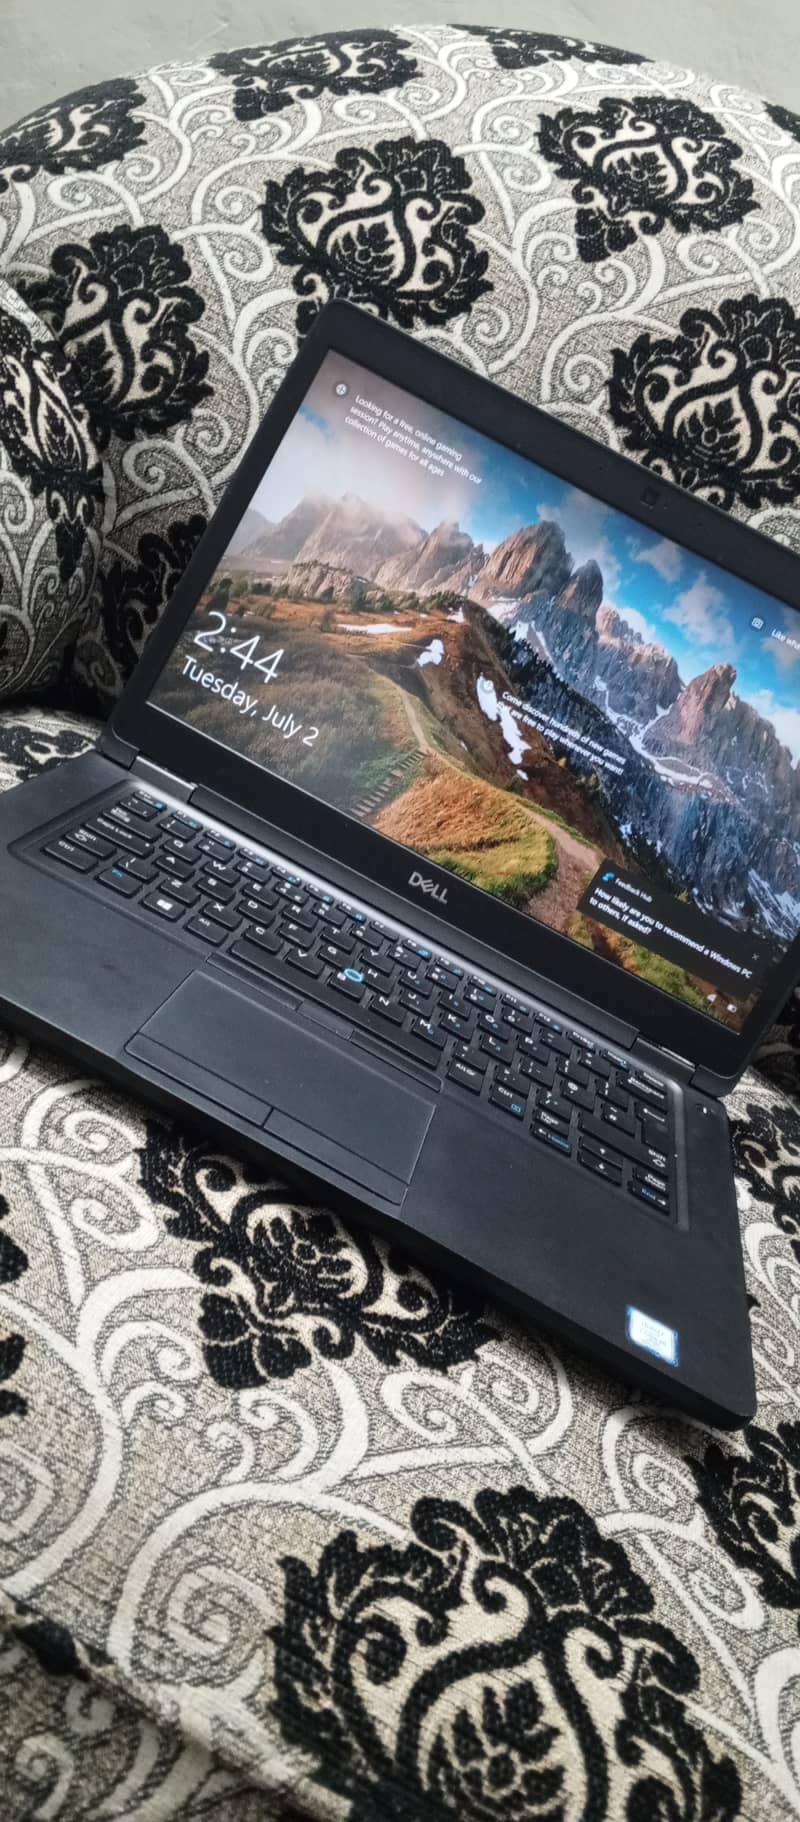 Core i 5 8th generation laptop 2